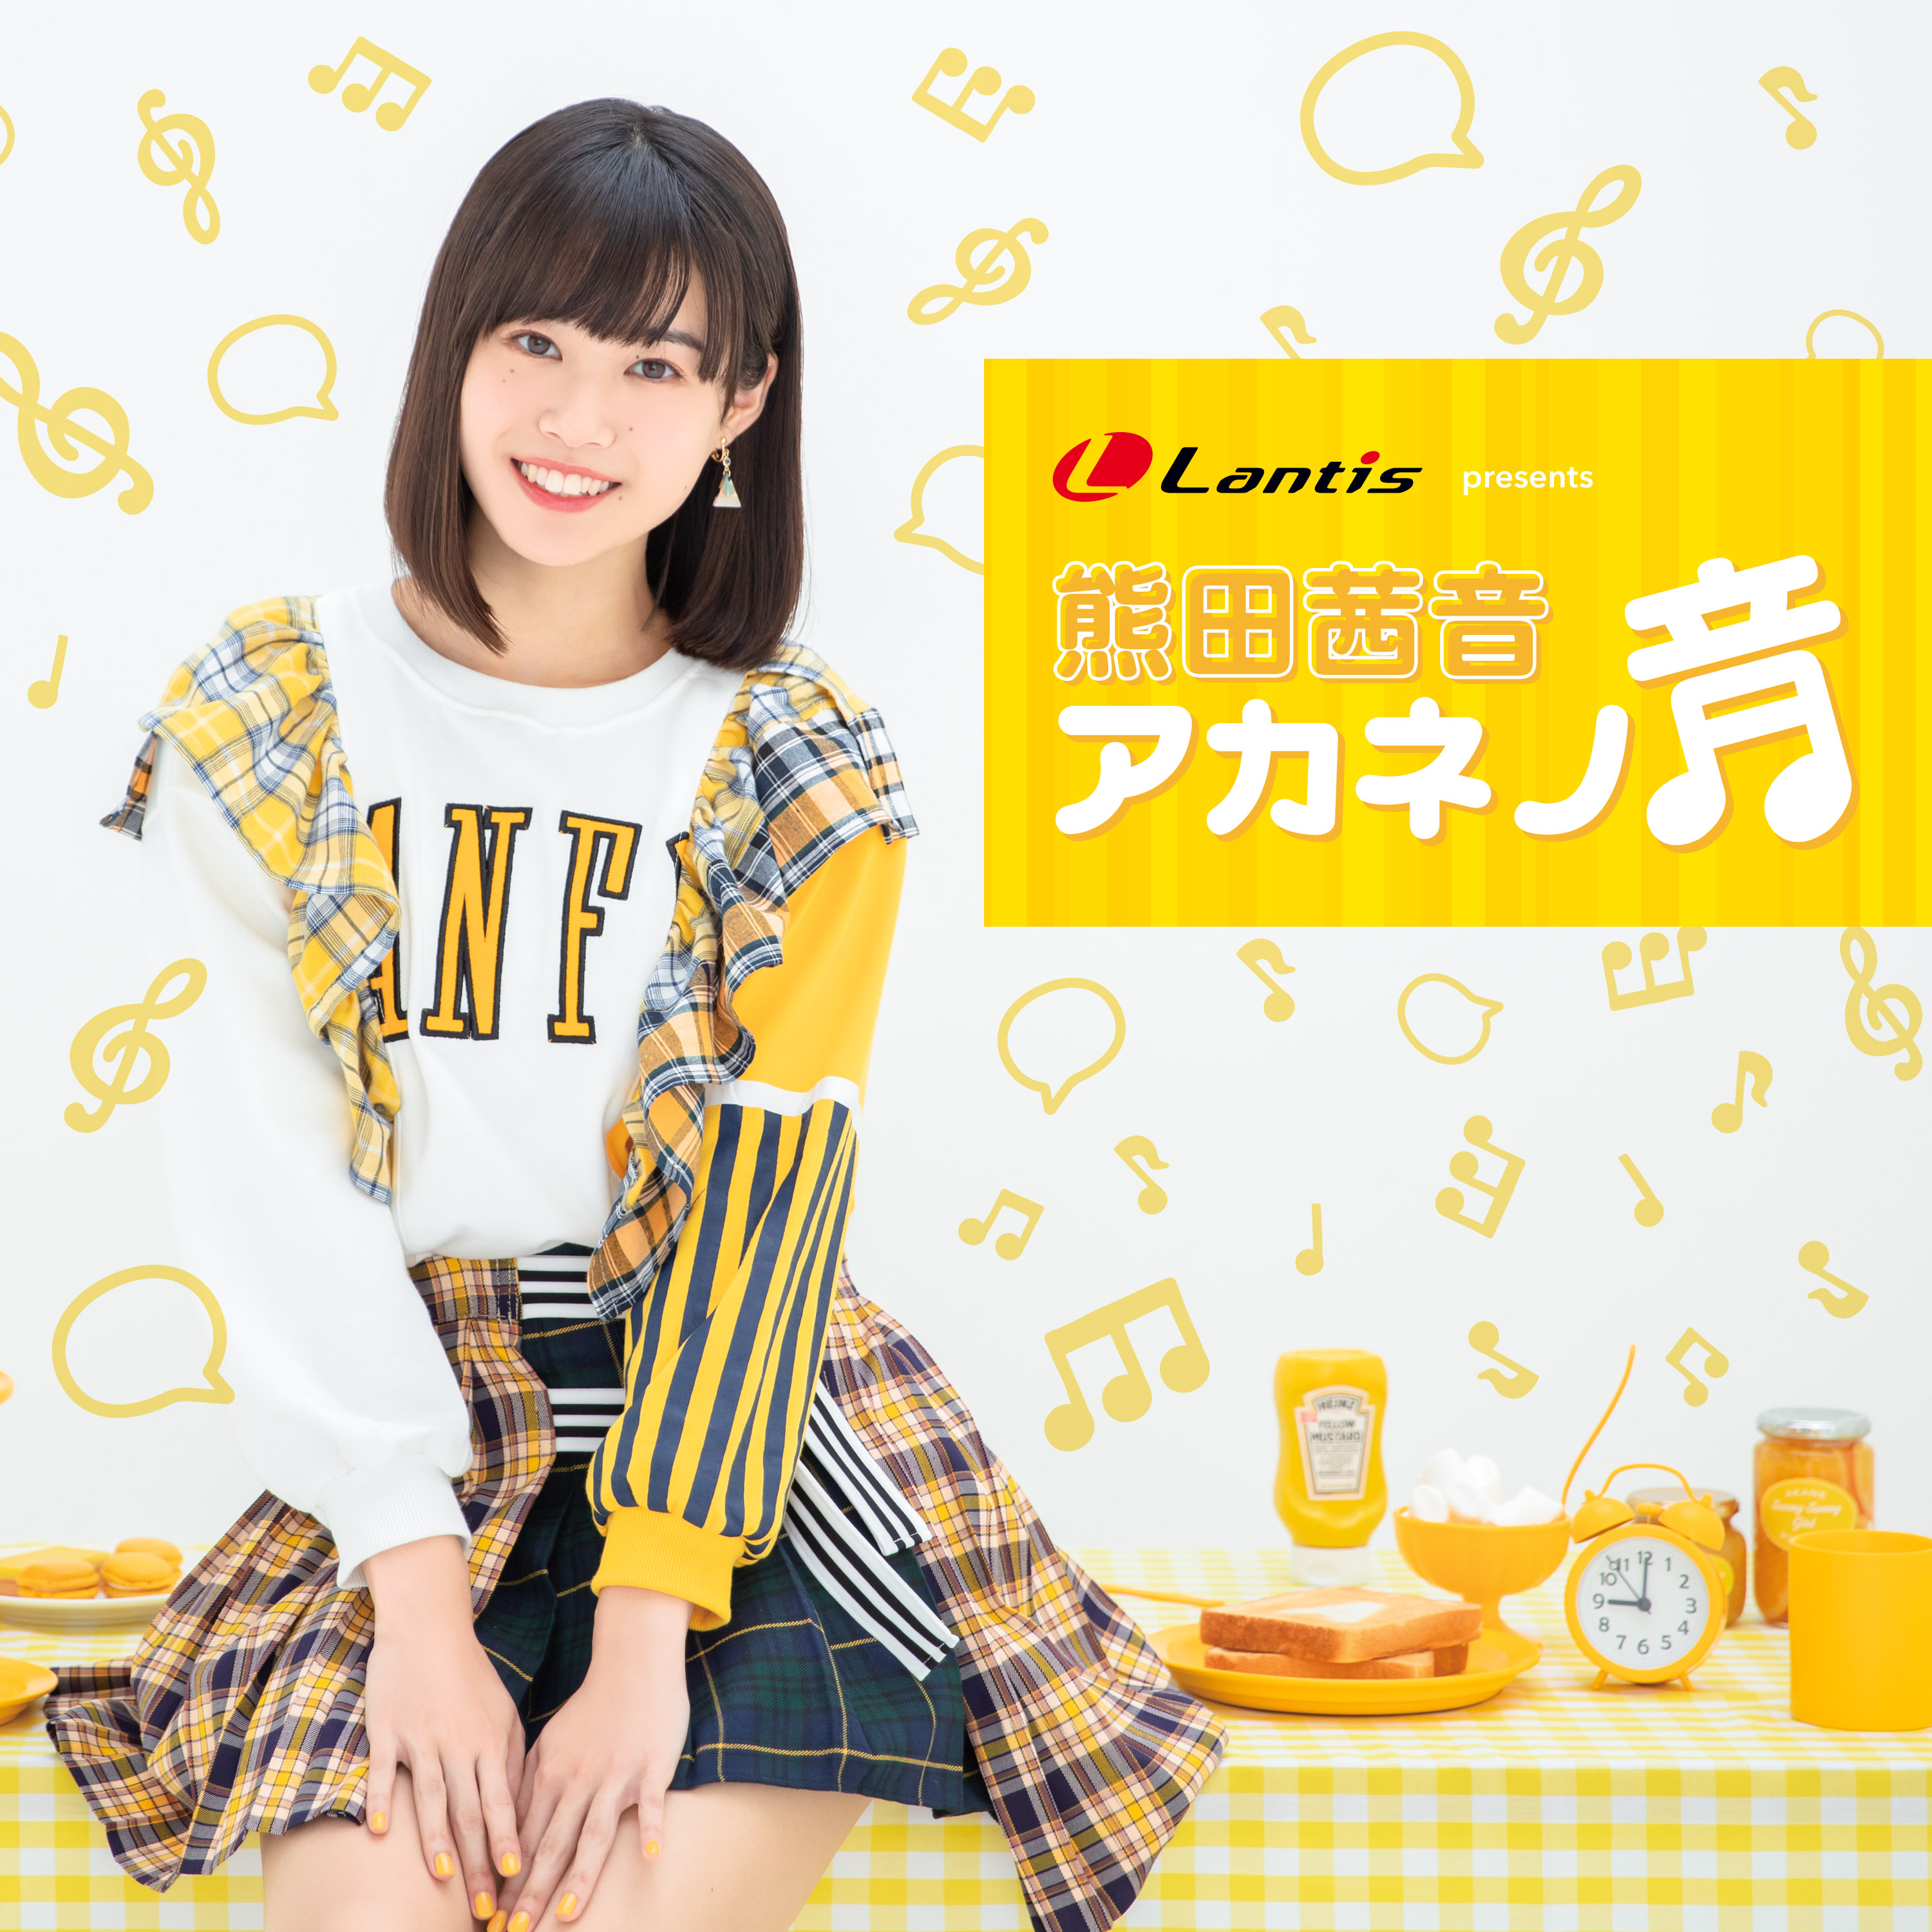 Lantis Presents 熊田茜音 アカネノ音 #303-306